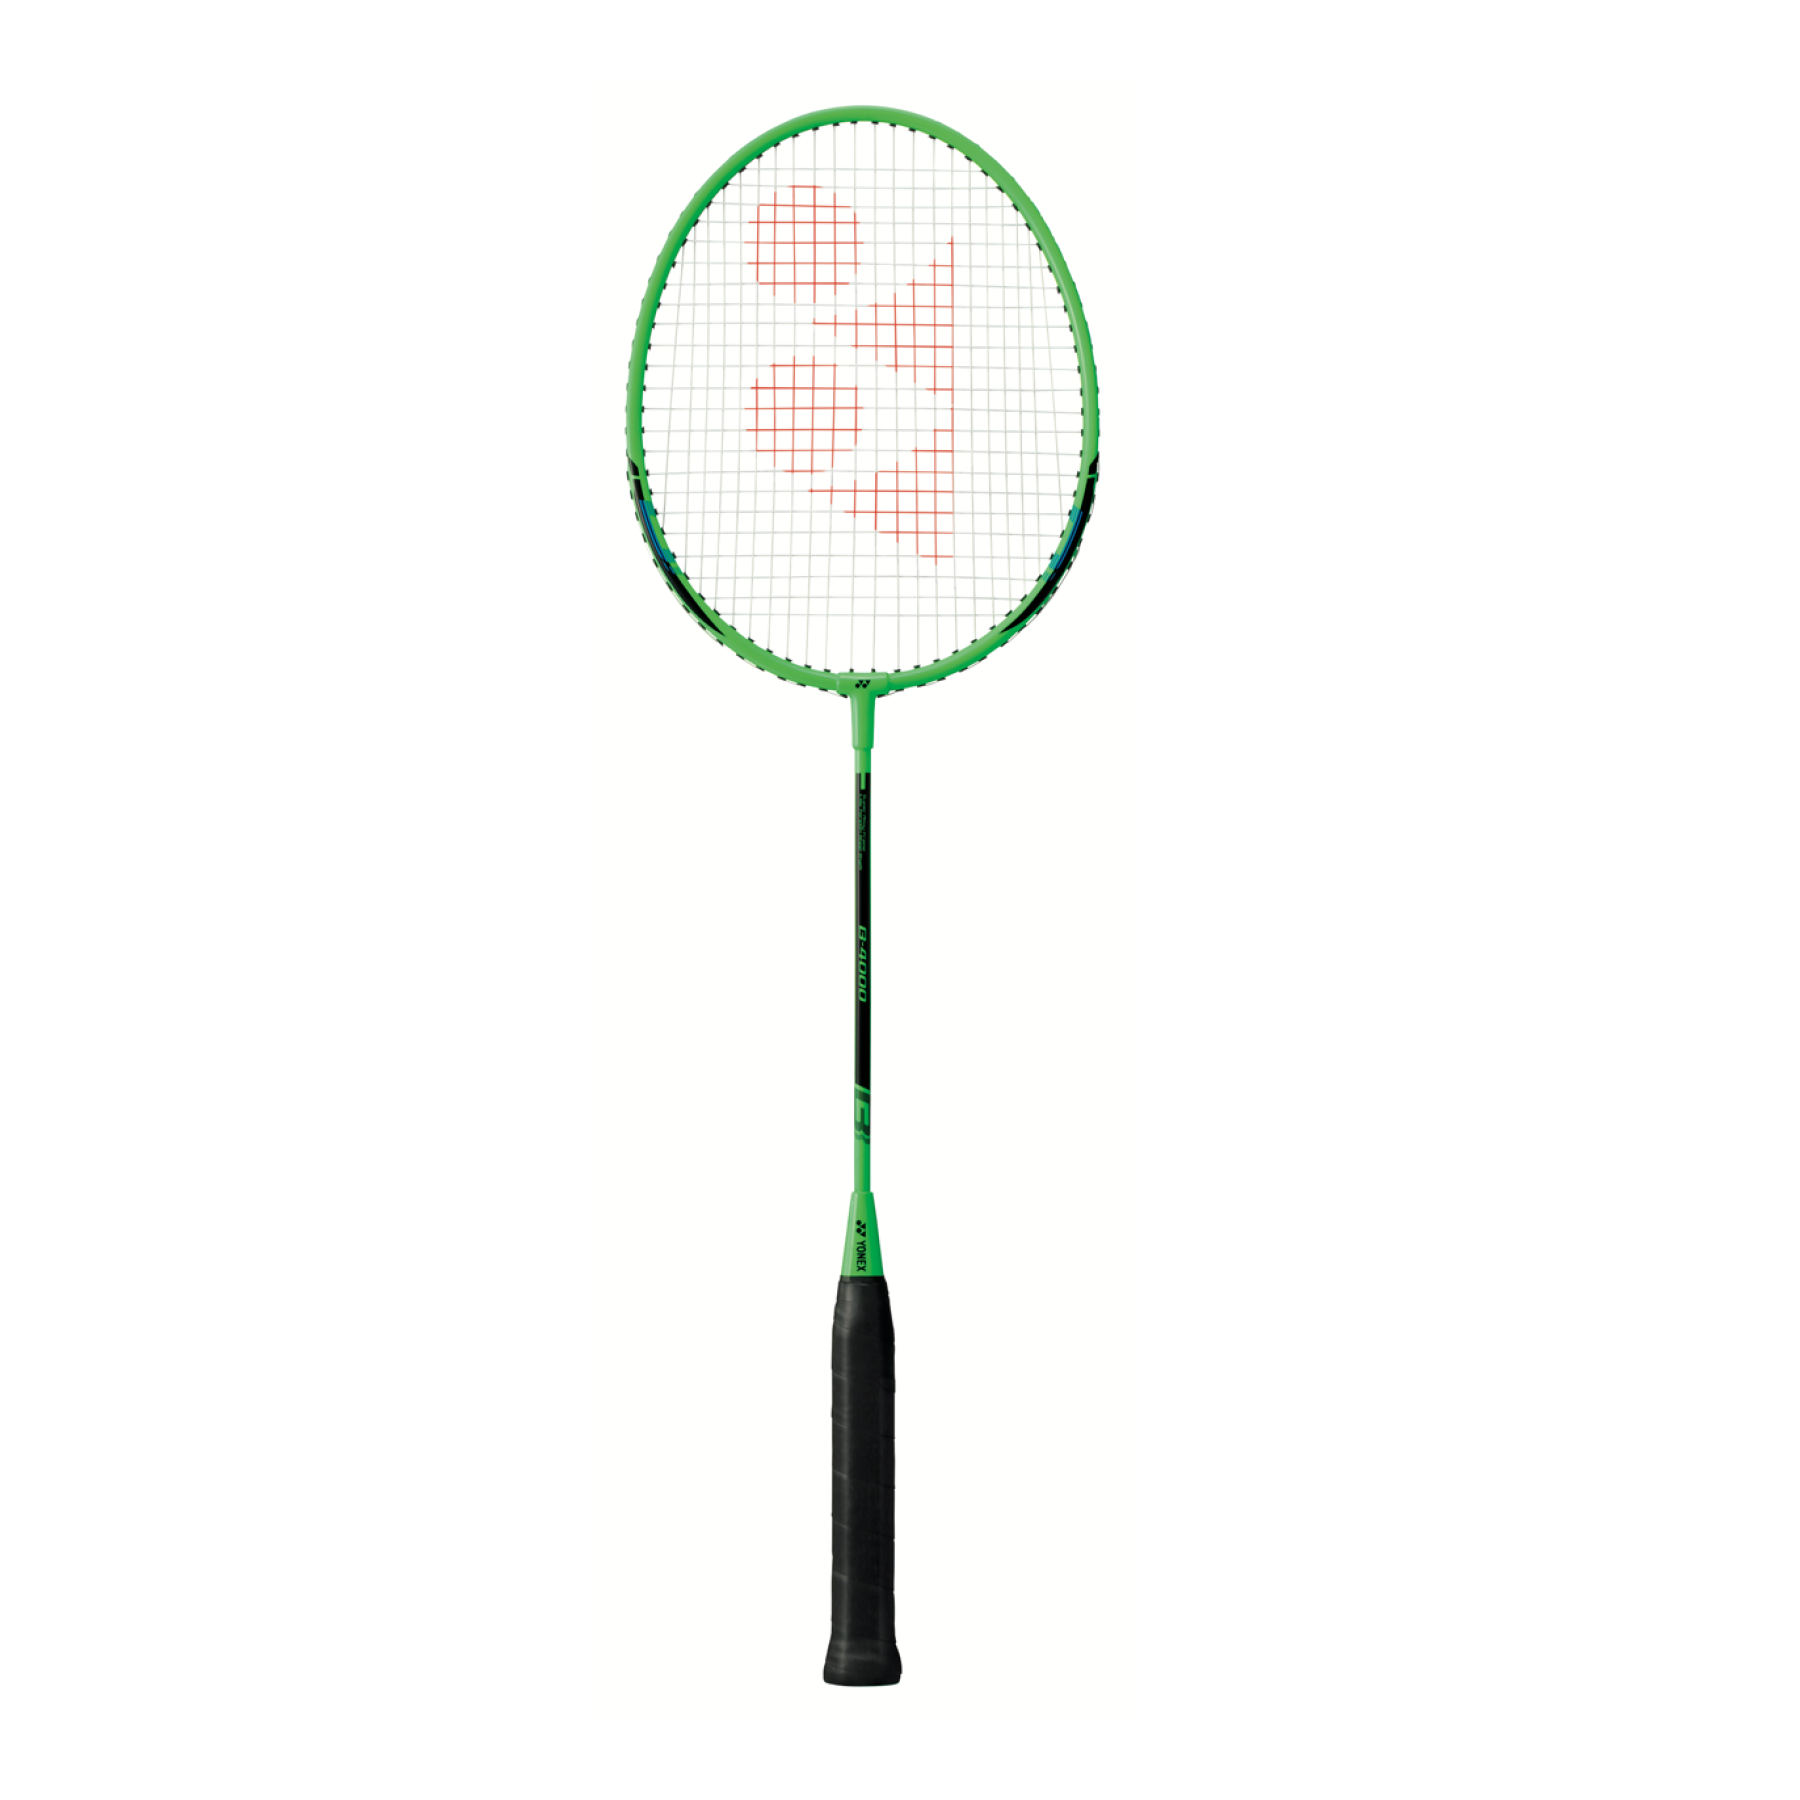 Rakieta do badmintona Yonex gr-020g g3